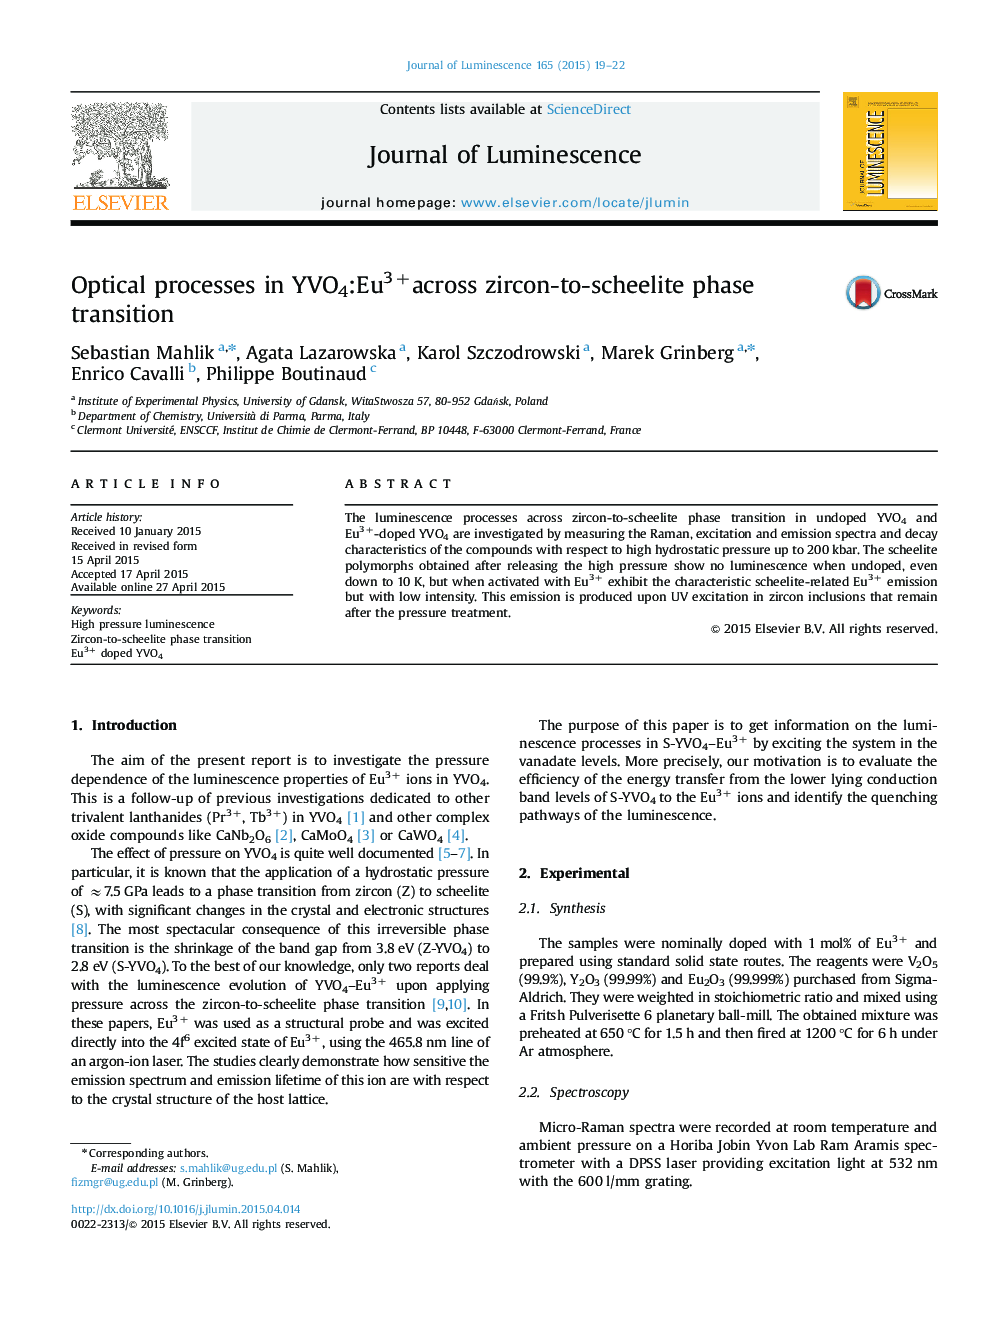 Optical processes in YVO4:Eu3+across zircon-to-scheelite phase transition